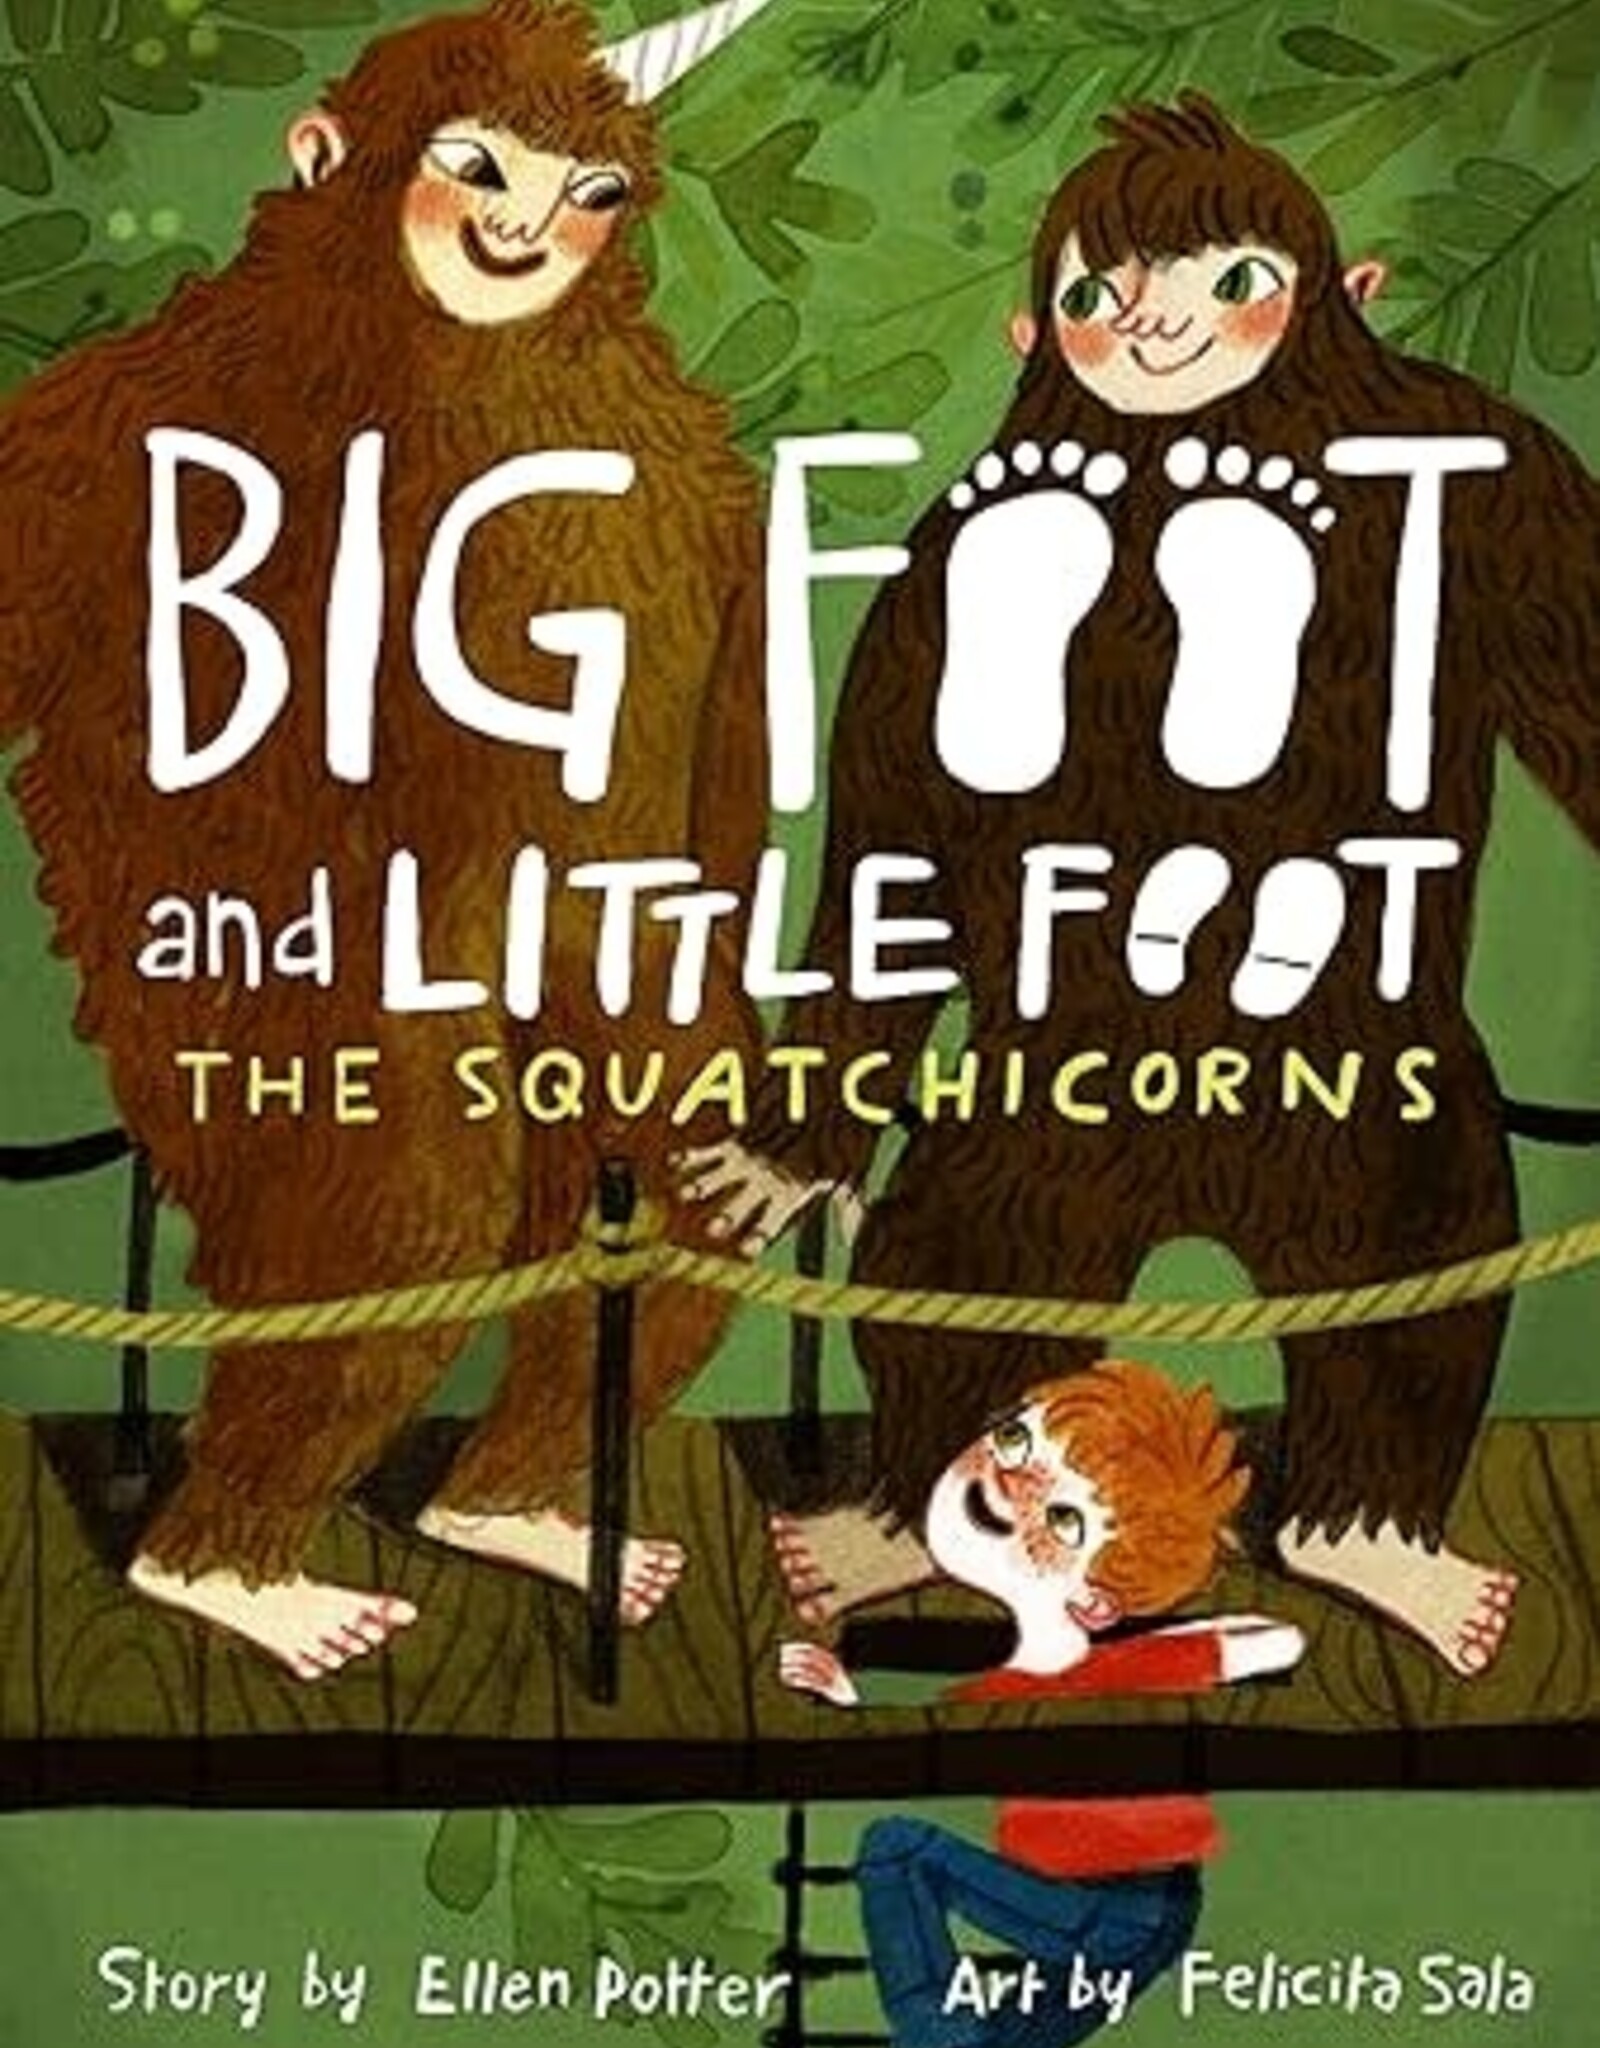 Big Foot Little Foot #3 Squatchicorns